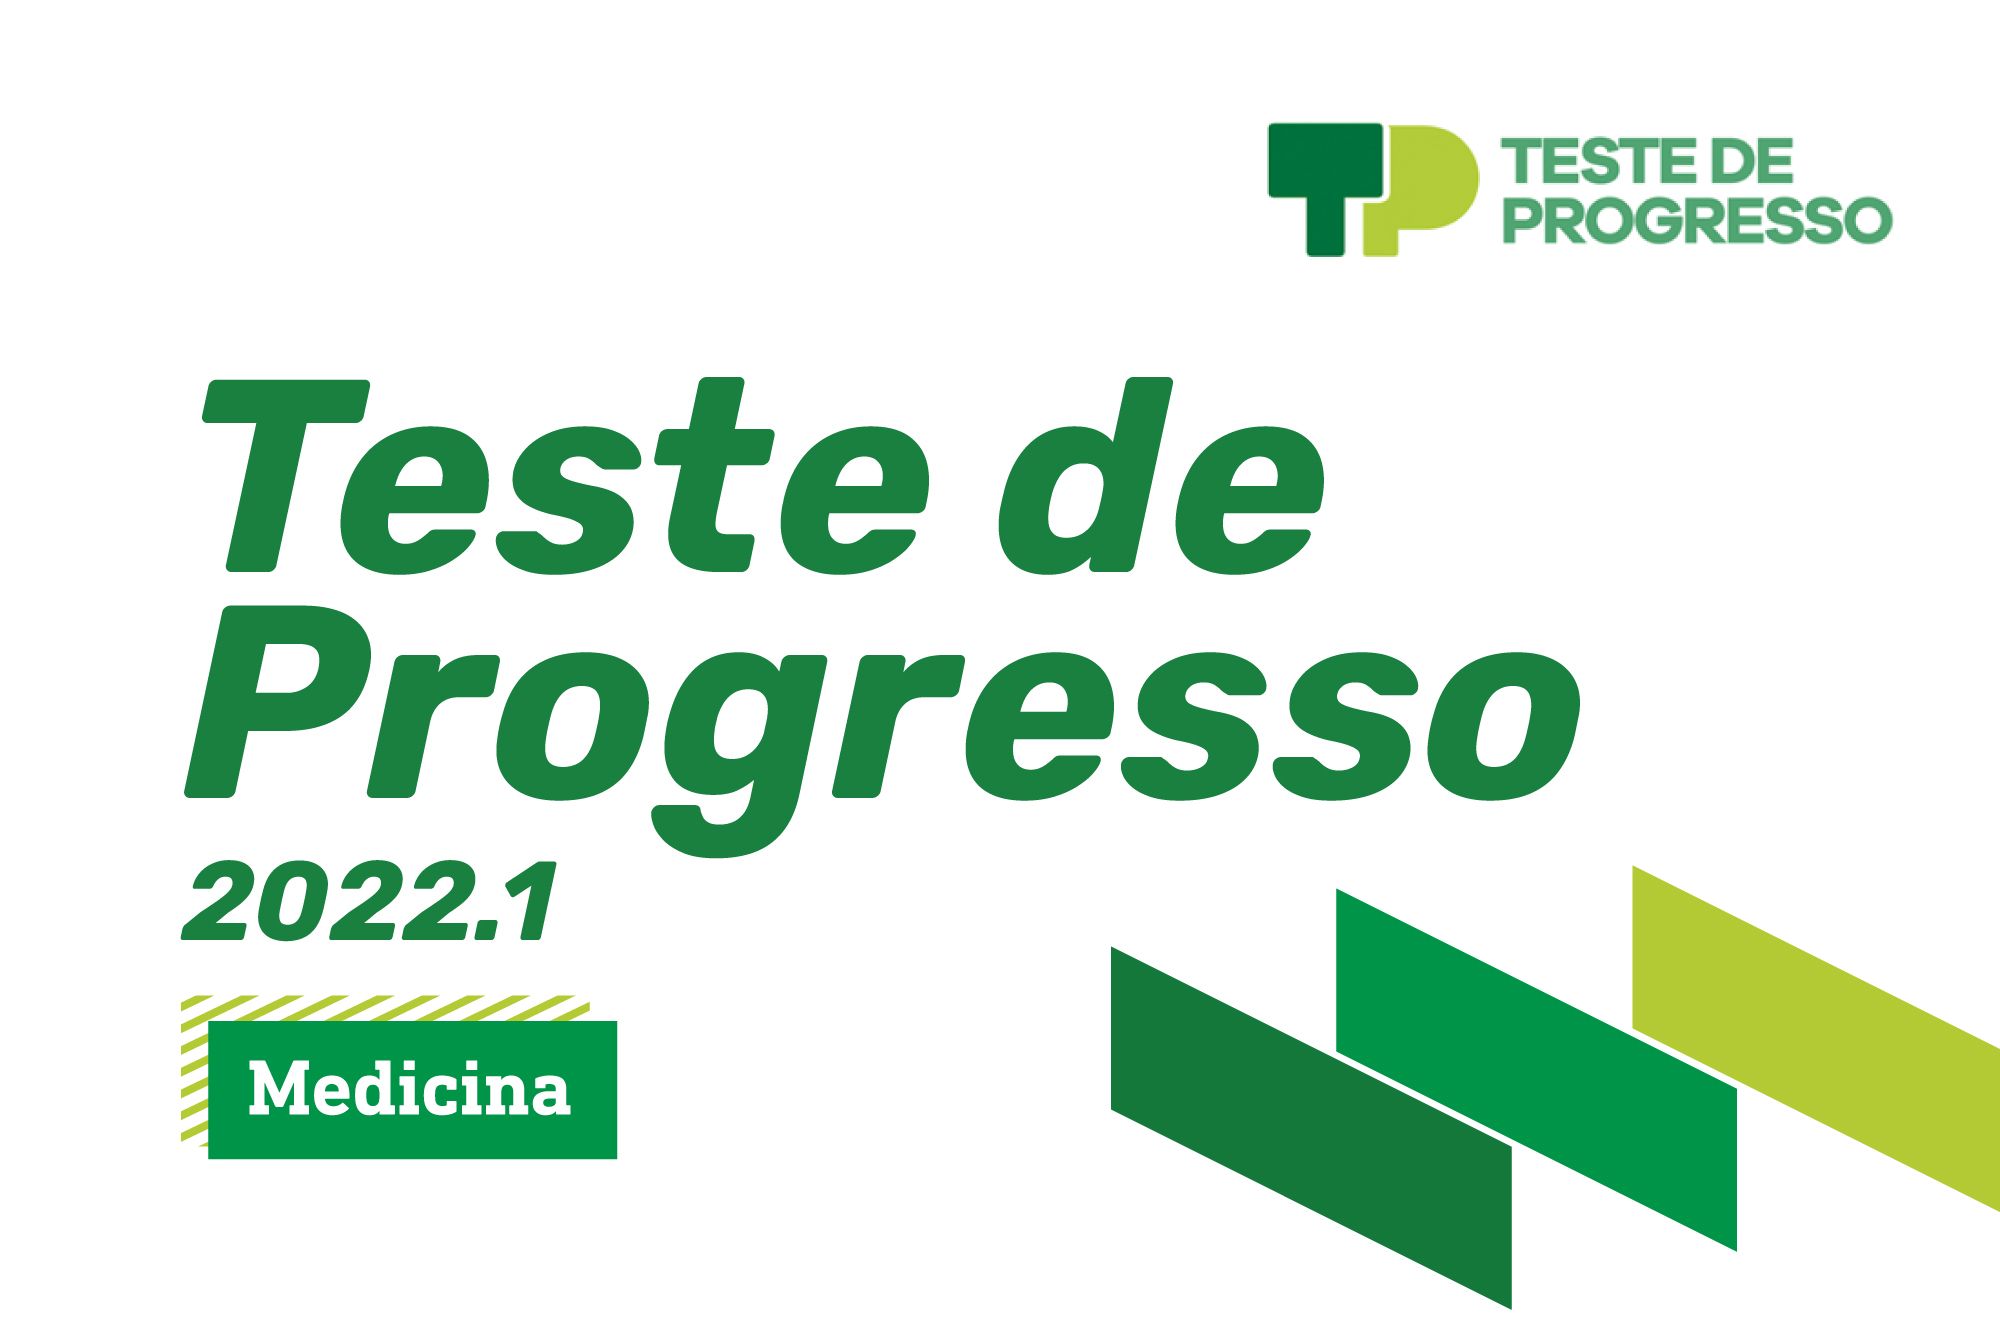 Teste de Progresso Medicina - 2022.1